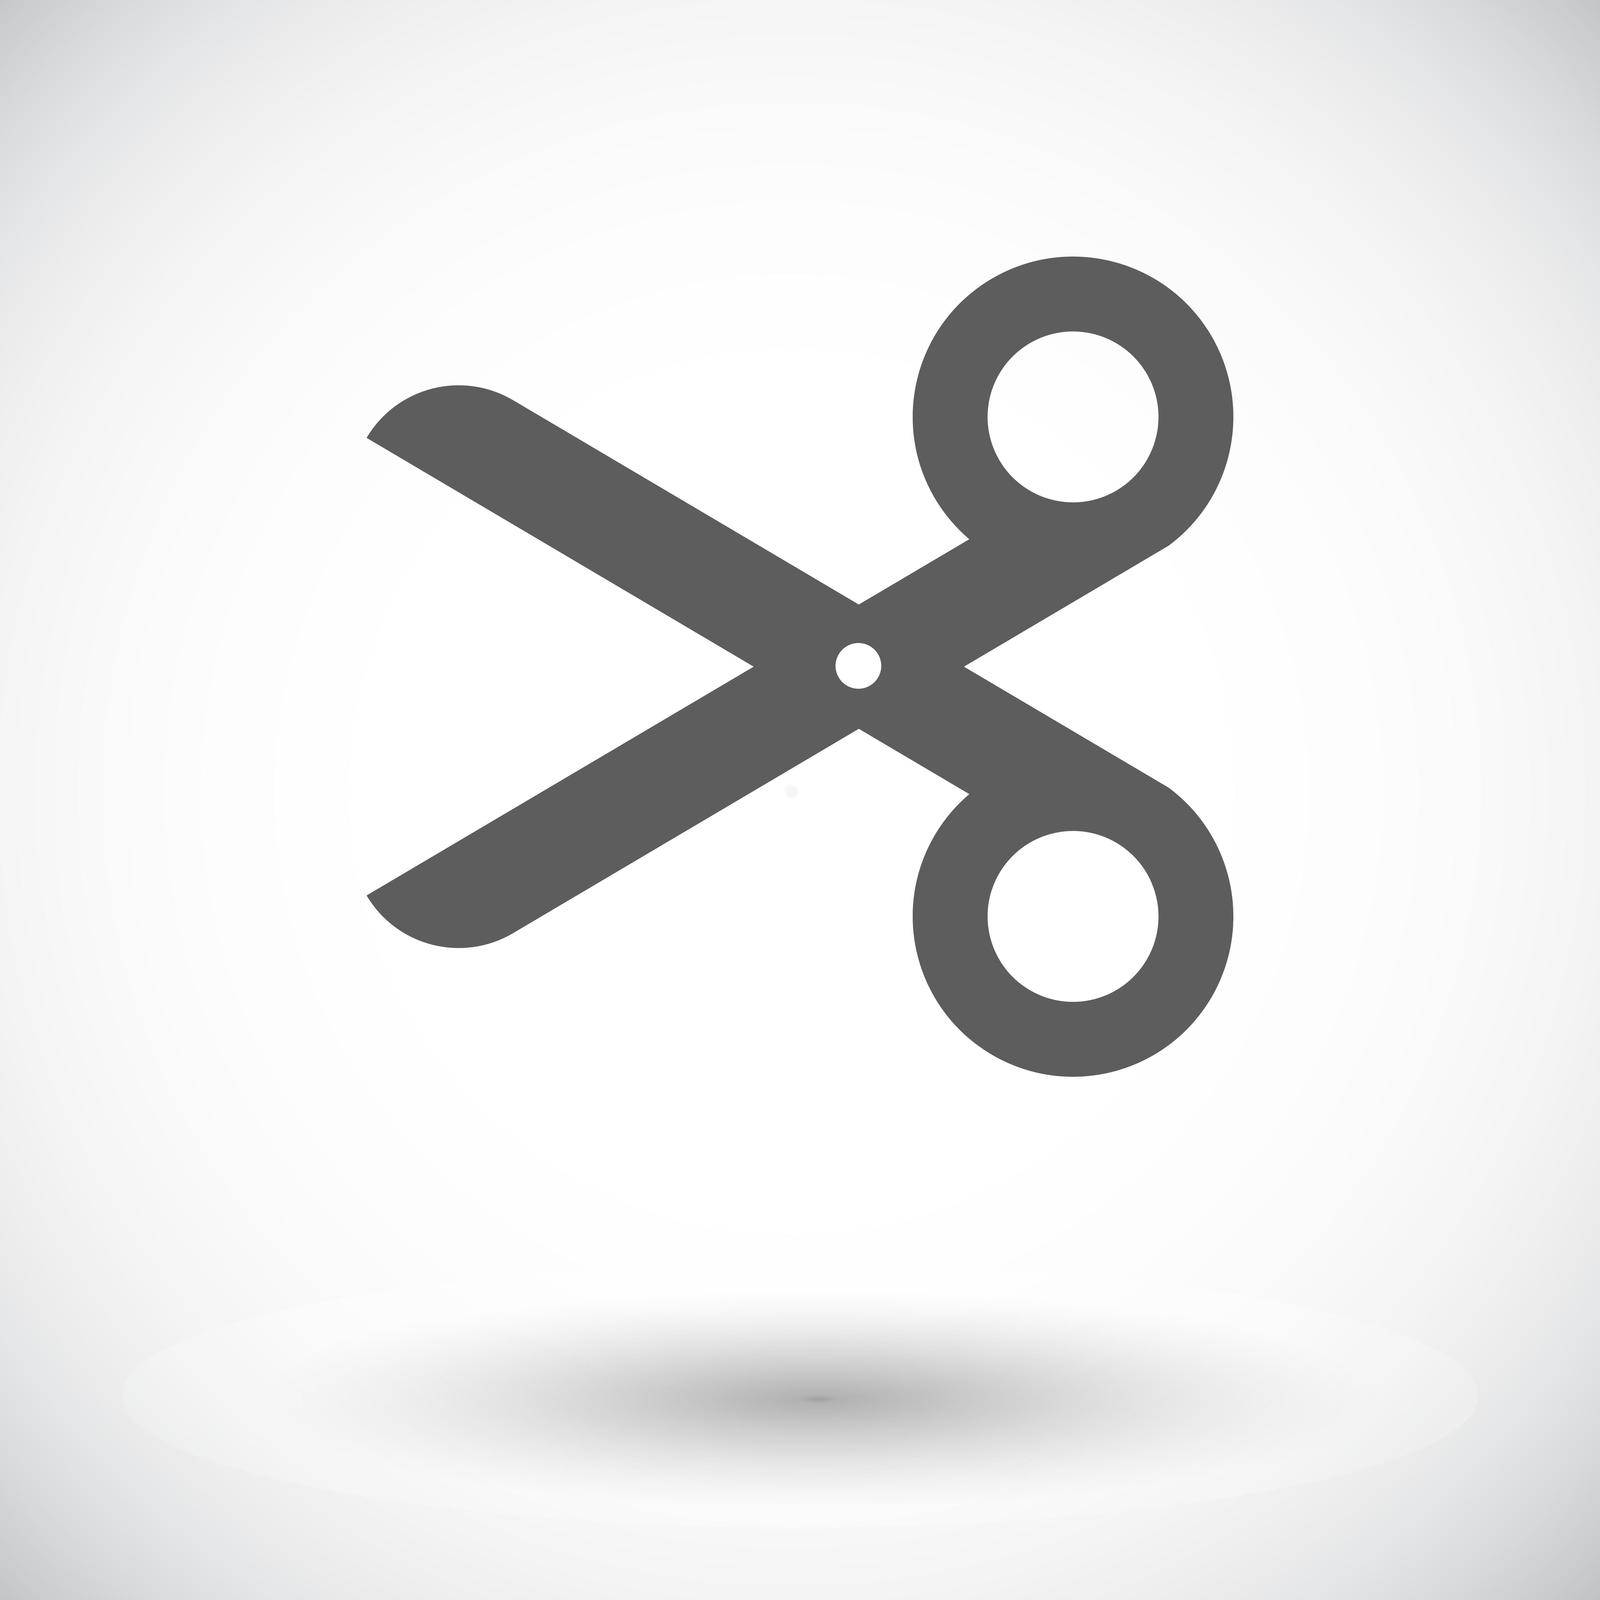 Scissors. Single flat icon on white background. Vector illustration.